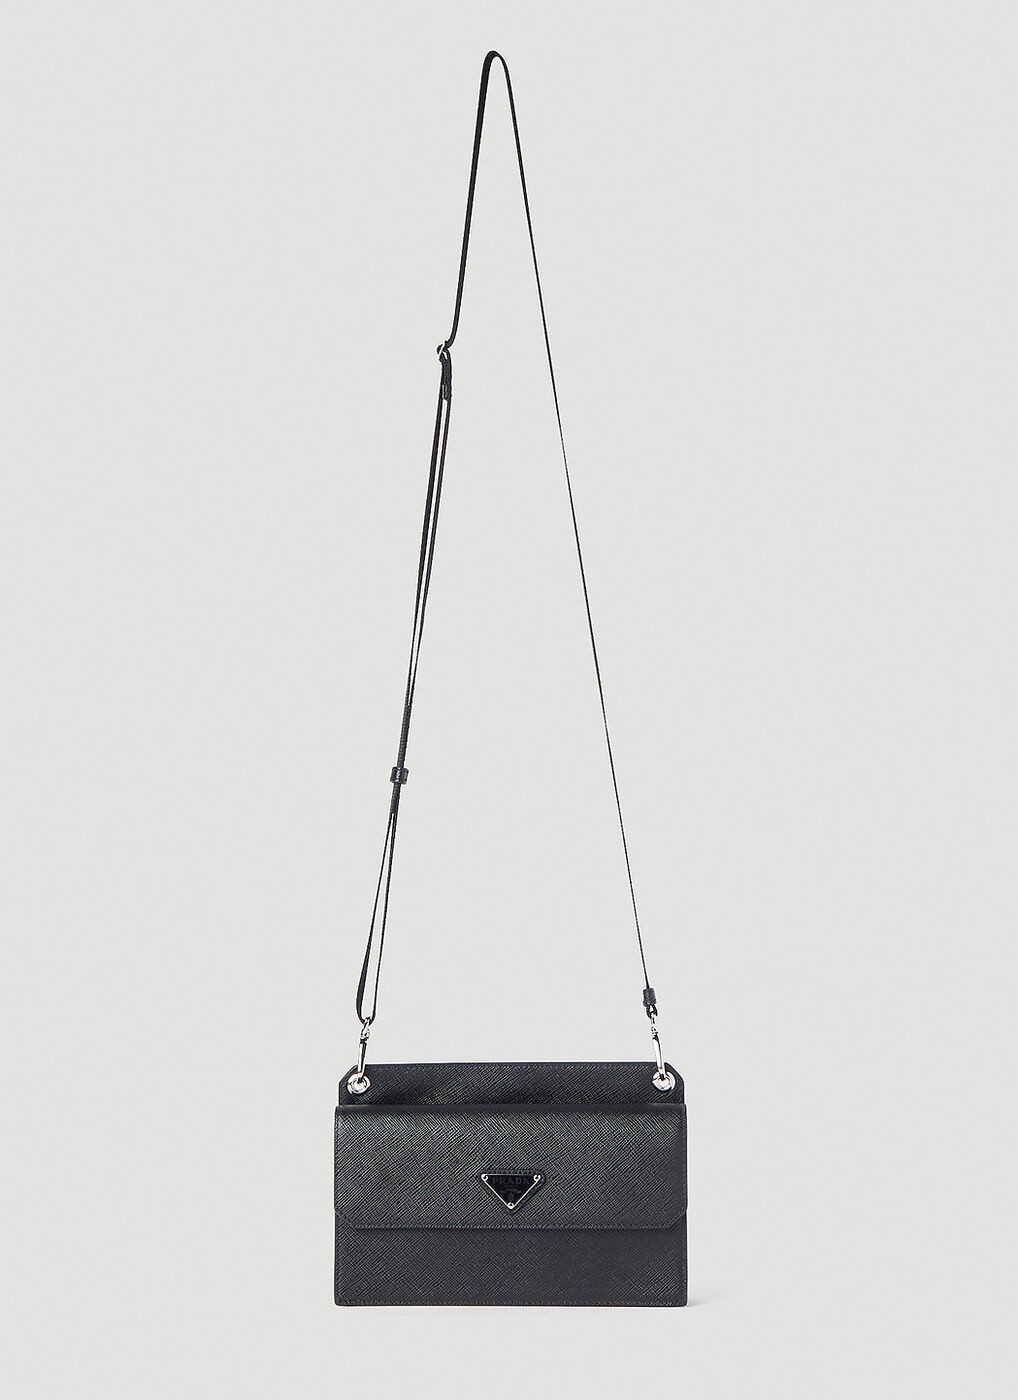 Prada Re-Nylon Black Lanyard Smartphone Holder Case Pouch Bag